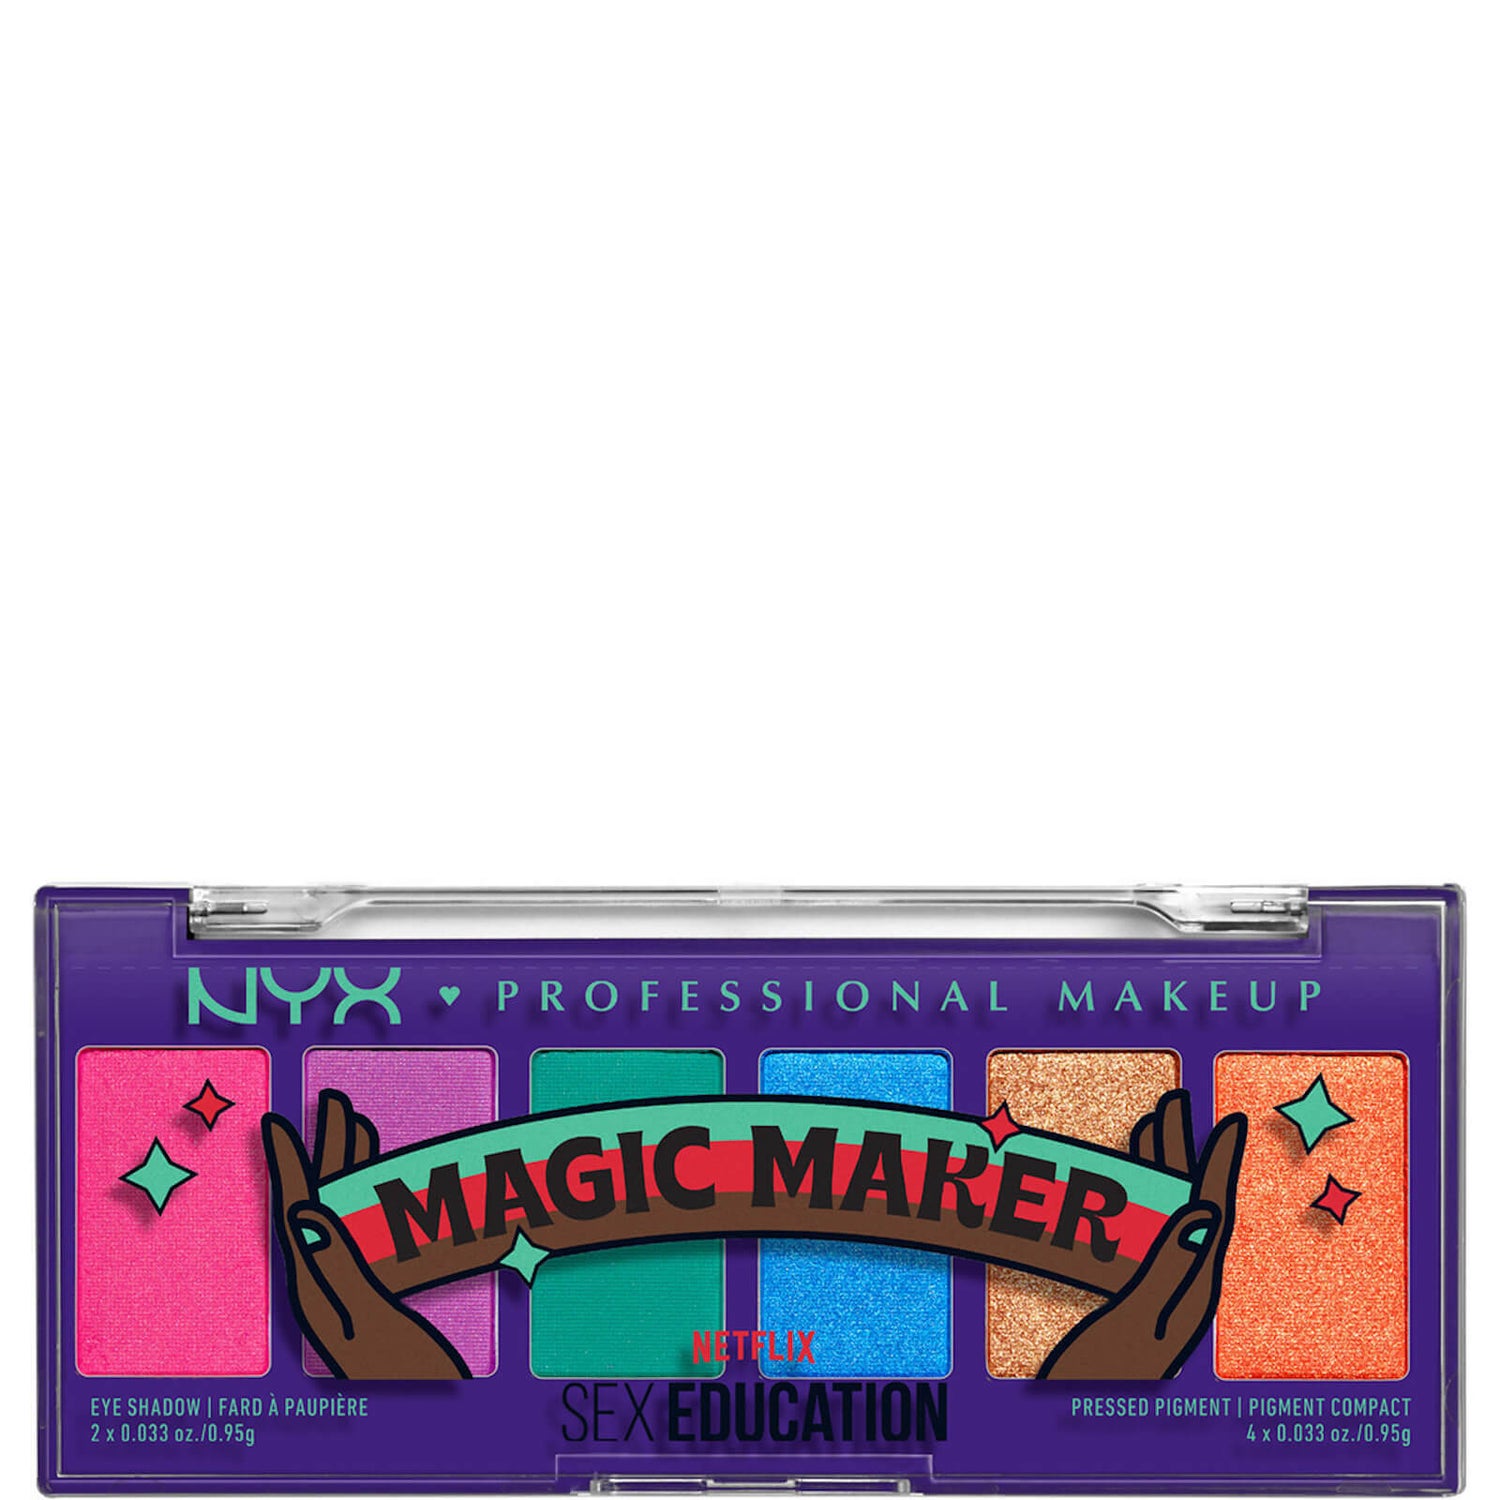 NYX Professional Makeup x Netflix's Sex Education Limited Edition 'Magic Maker' Παλέτα σκιών